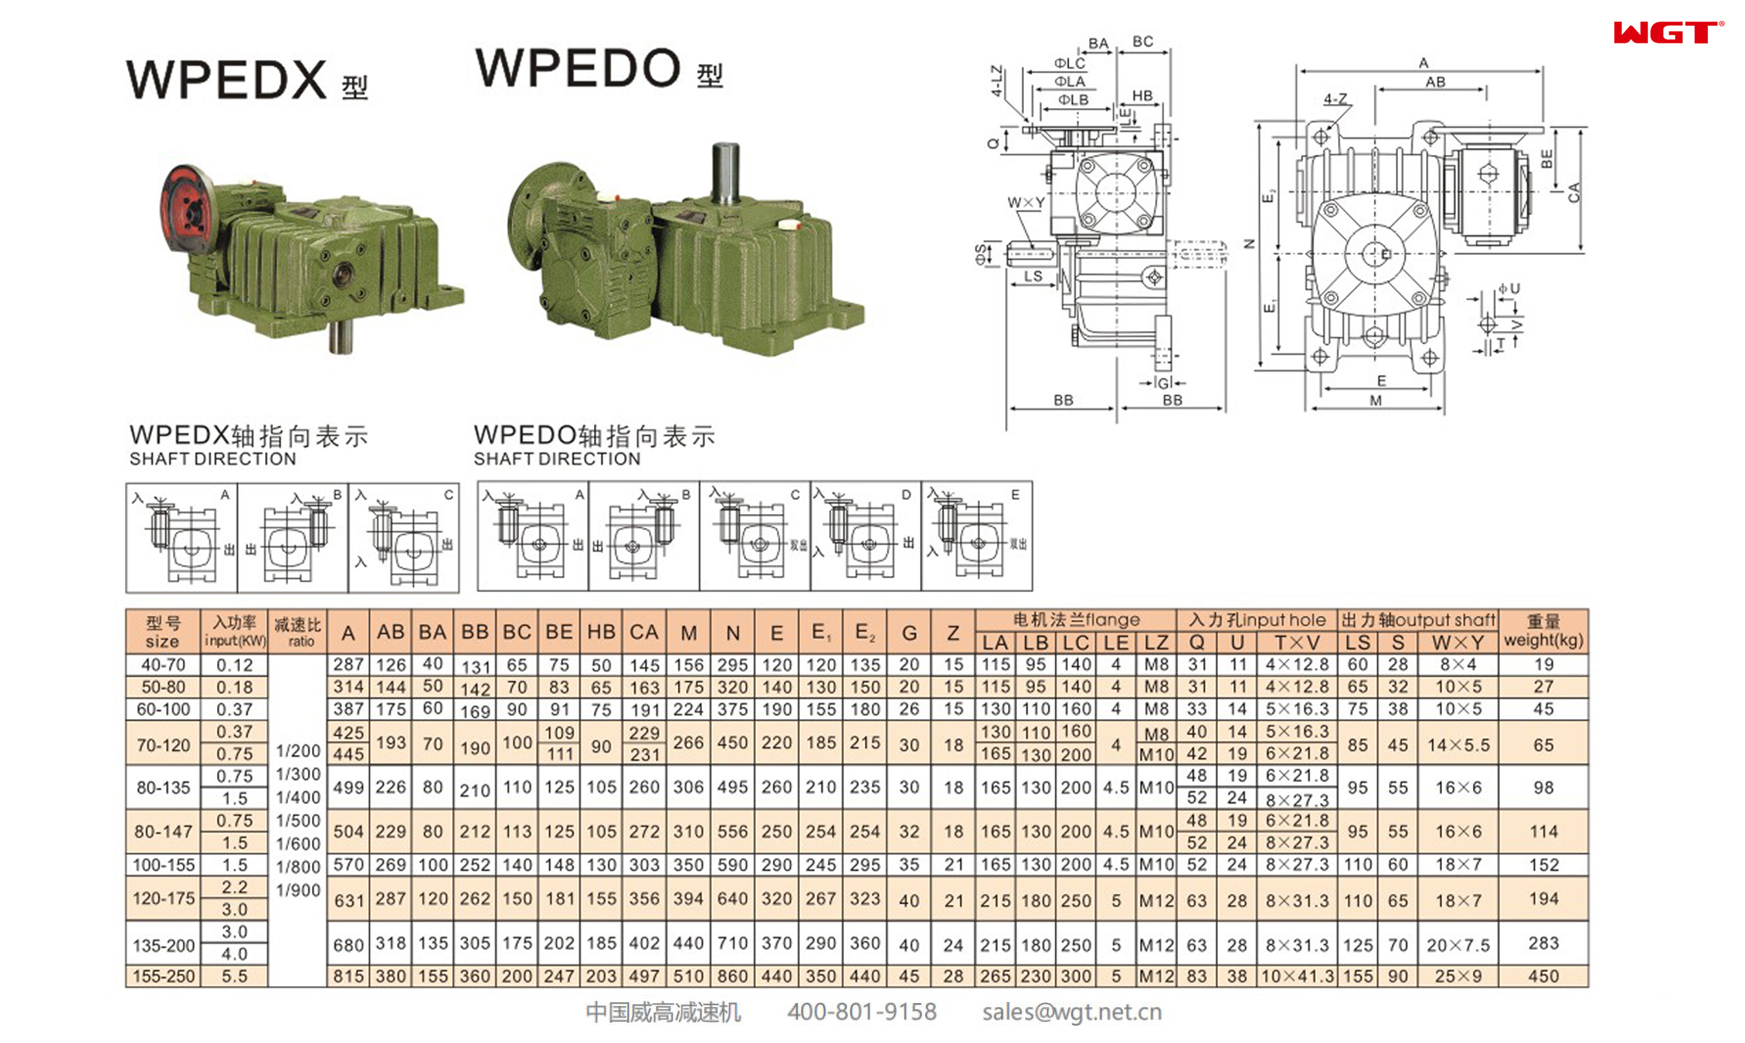 WPEDX WPEDO40-70 Worm Gear Reducer DOUBLE SPEED REDUCER